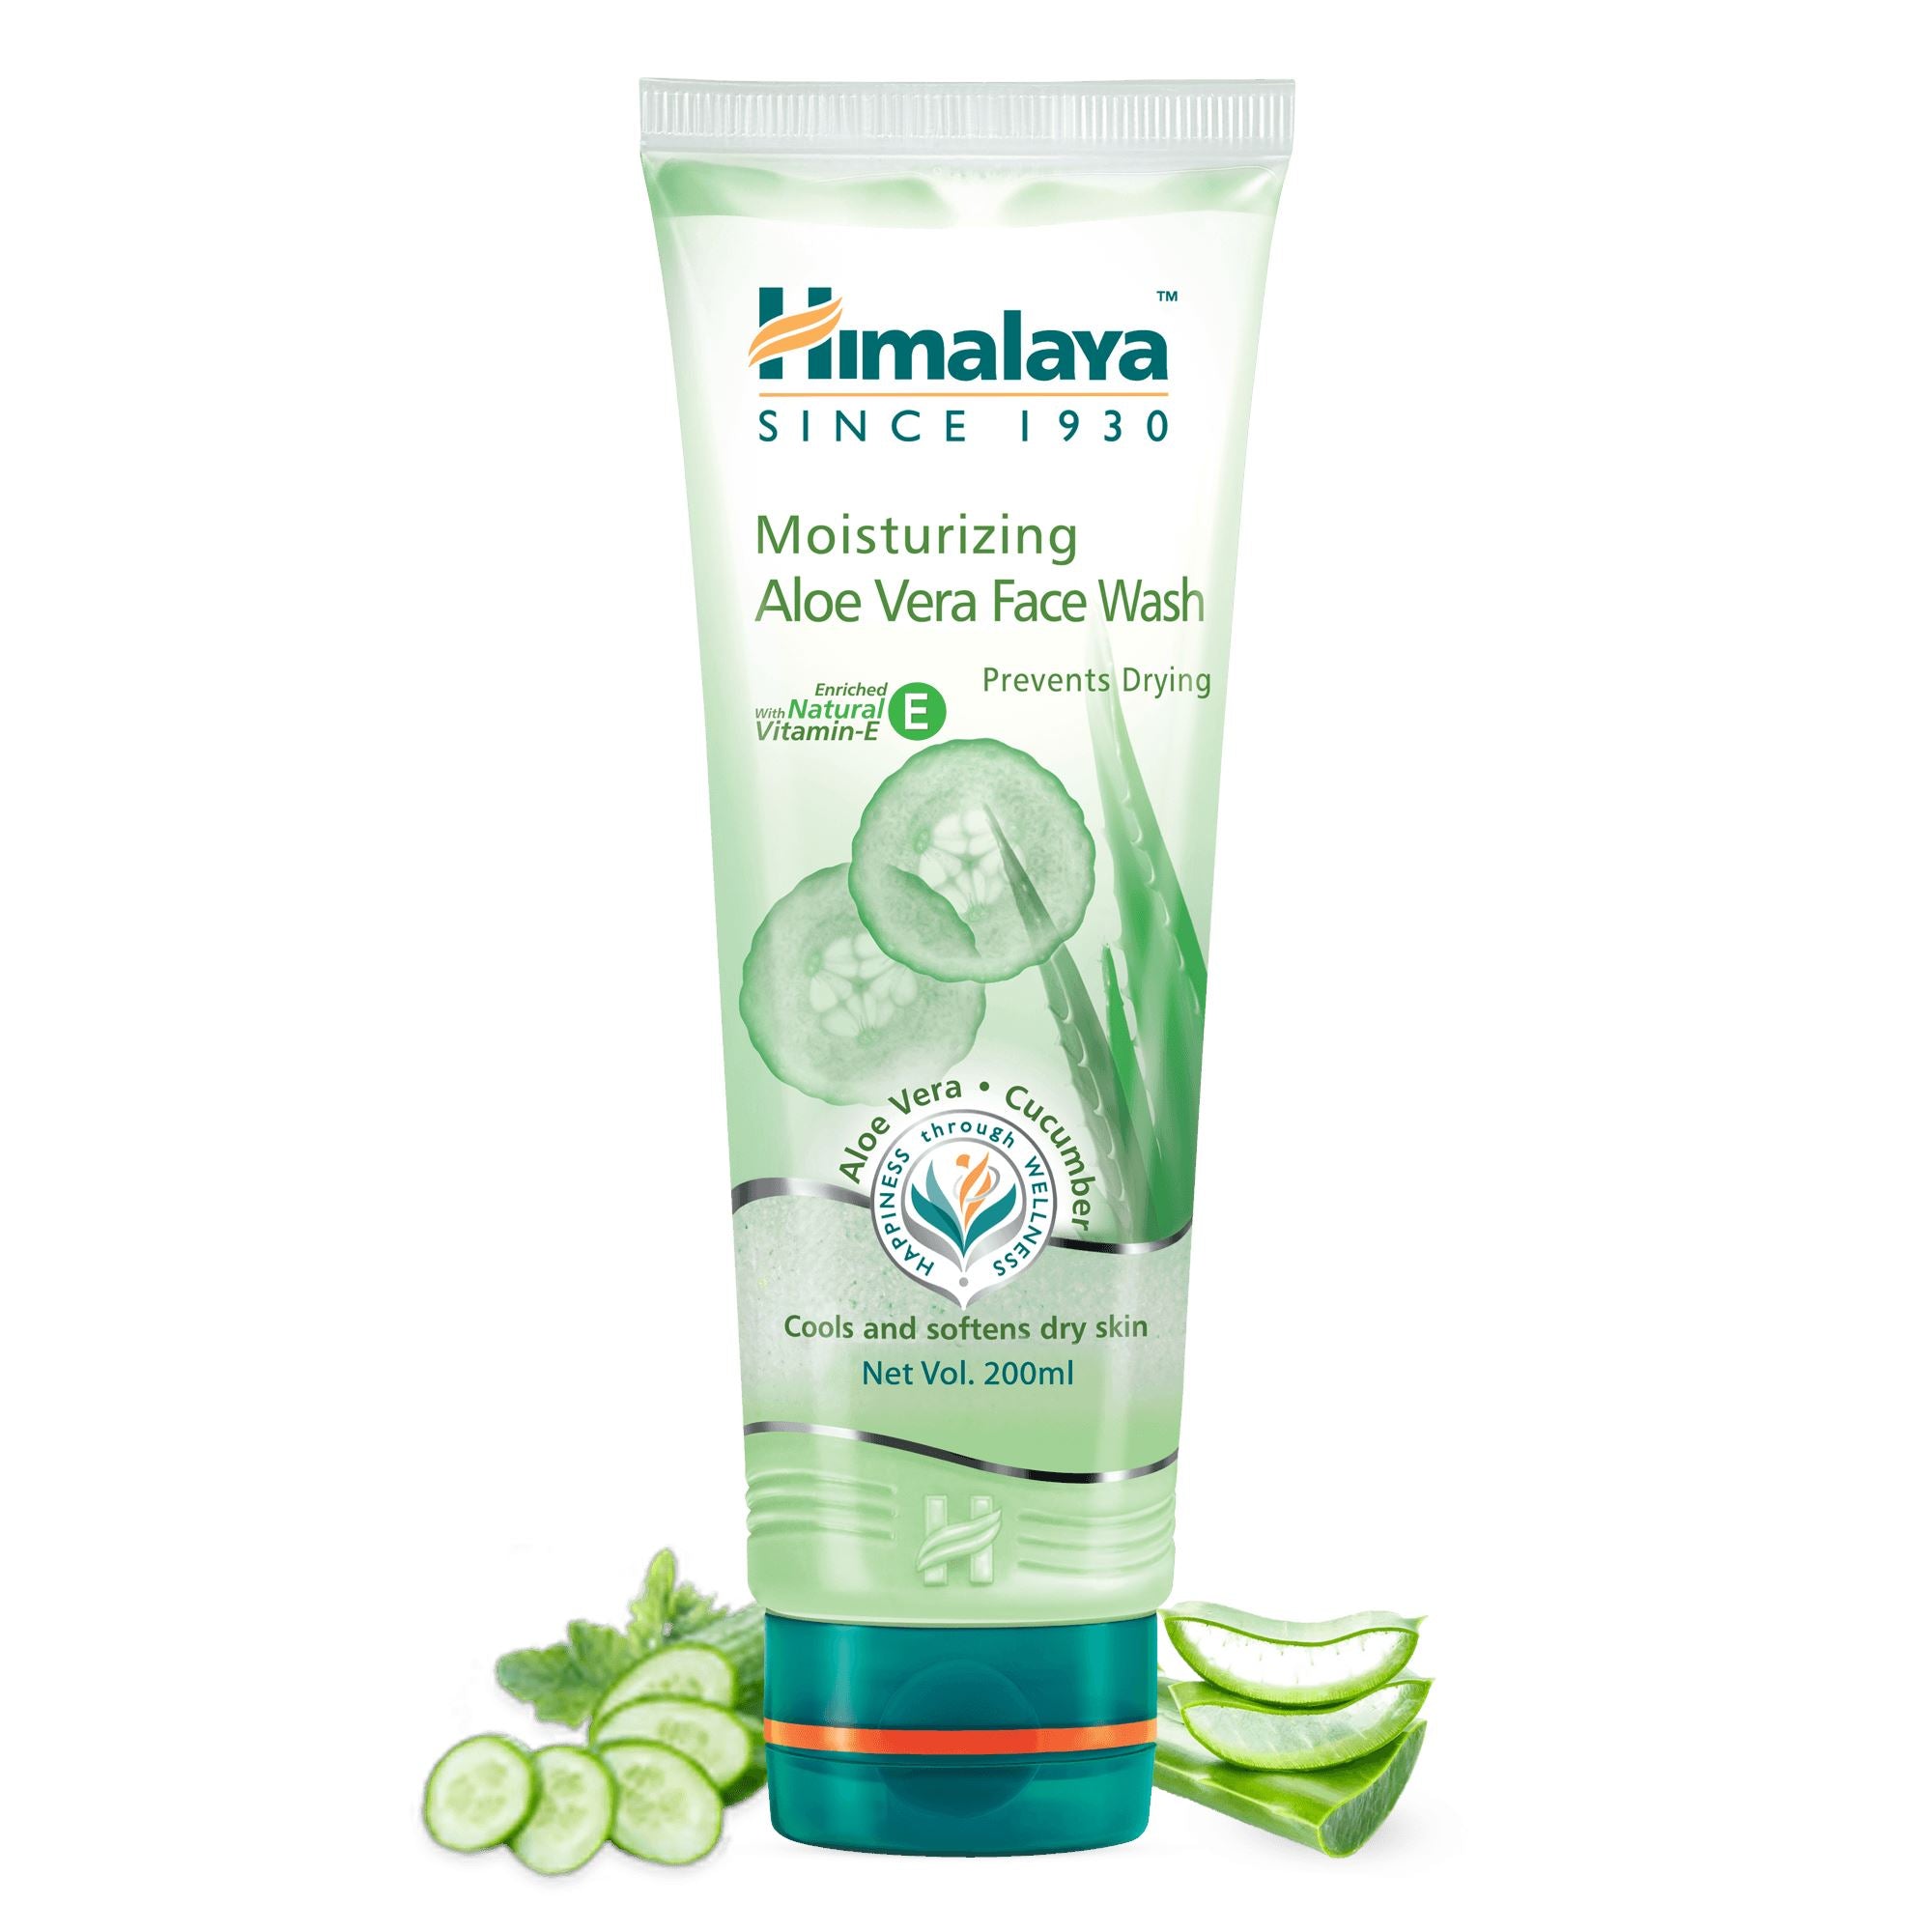 Himalaya Moisturizing Aloe Vera Face Wash 200ml - Cools and softens dry skin